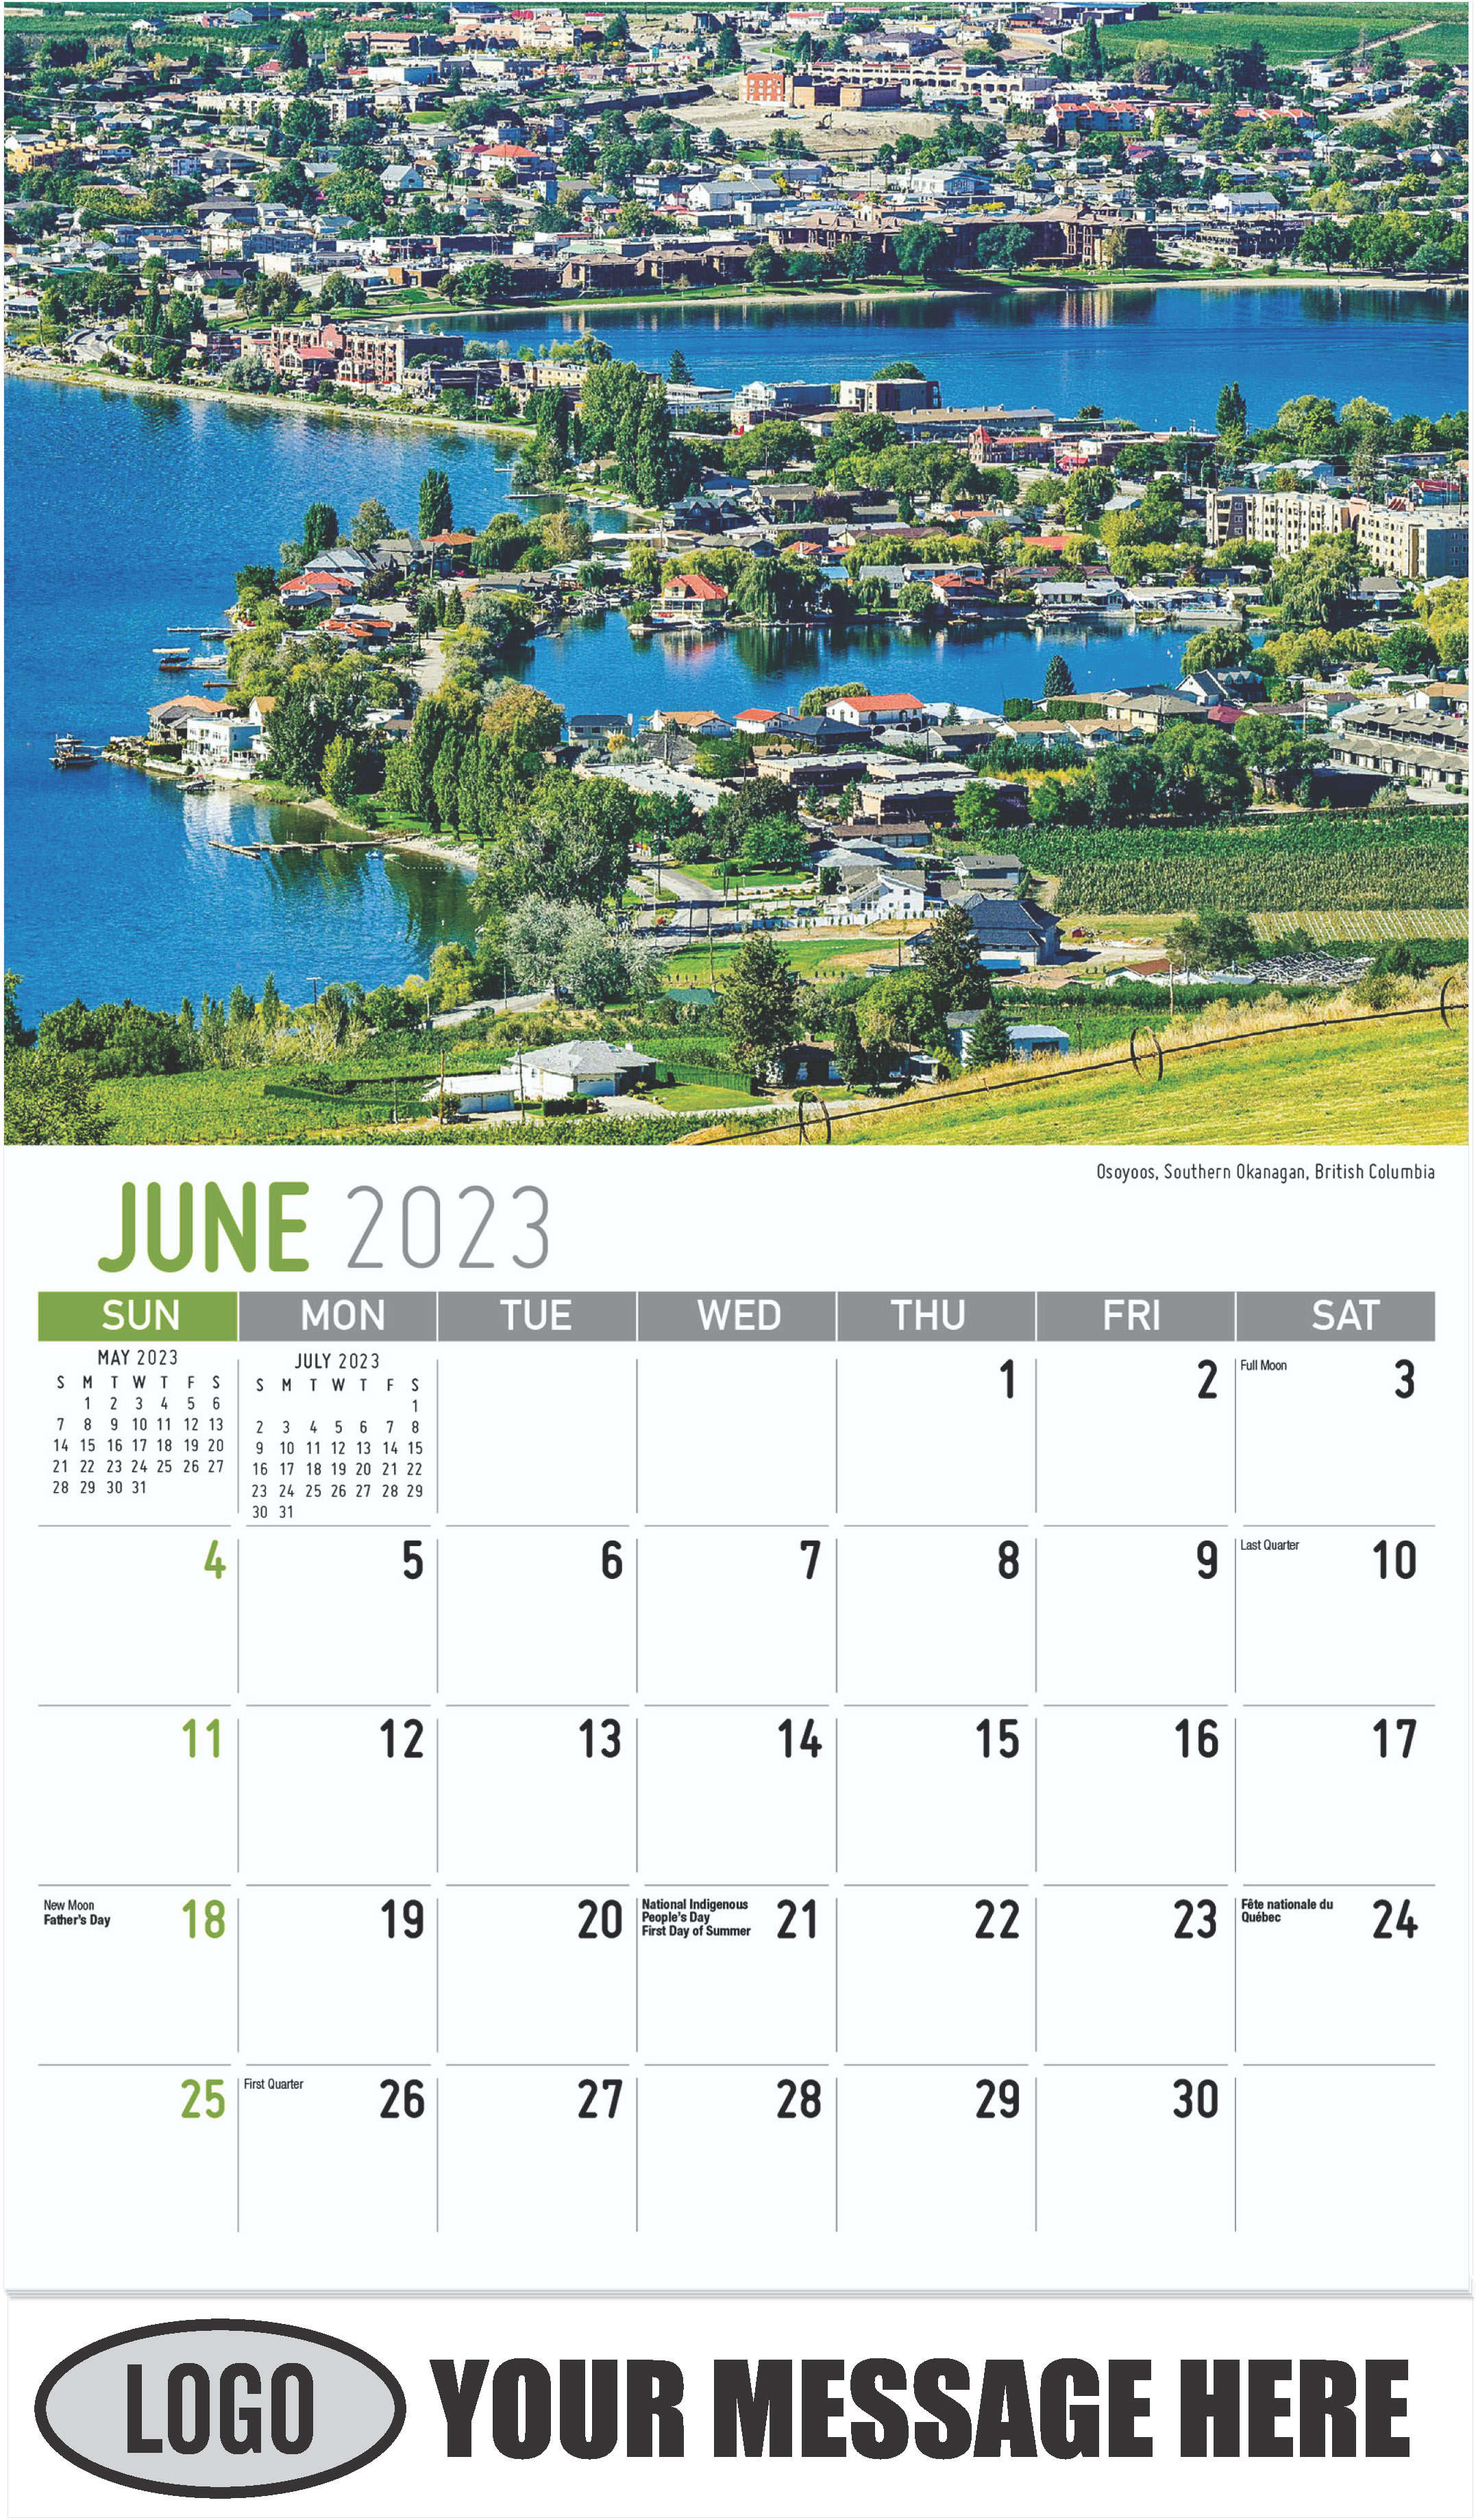 Osoyoos, Southern Okanagan, British Columbia - June - Scenes of Western Canada 2023 Promotional Calendar